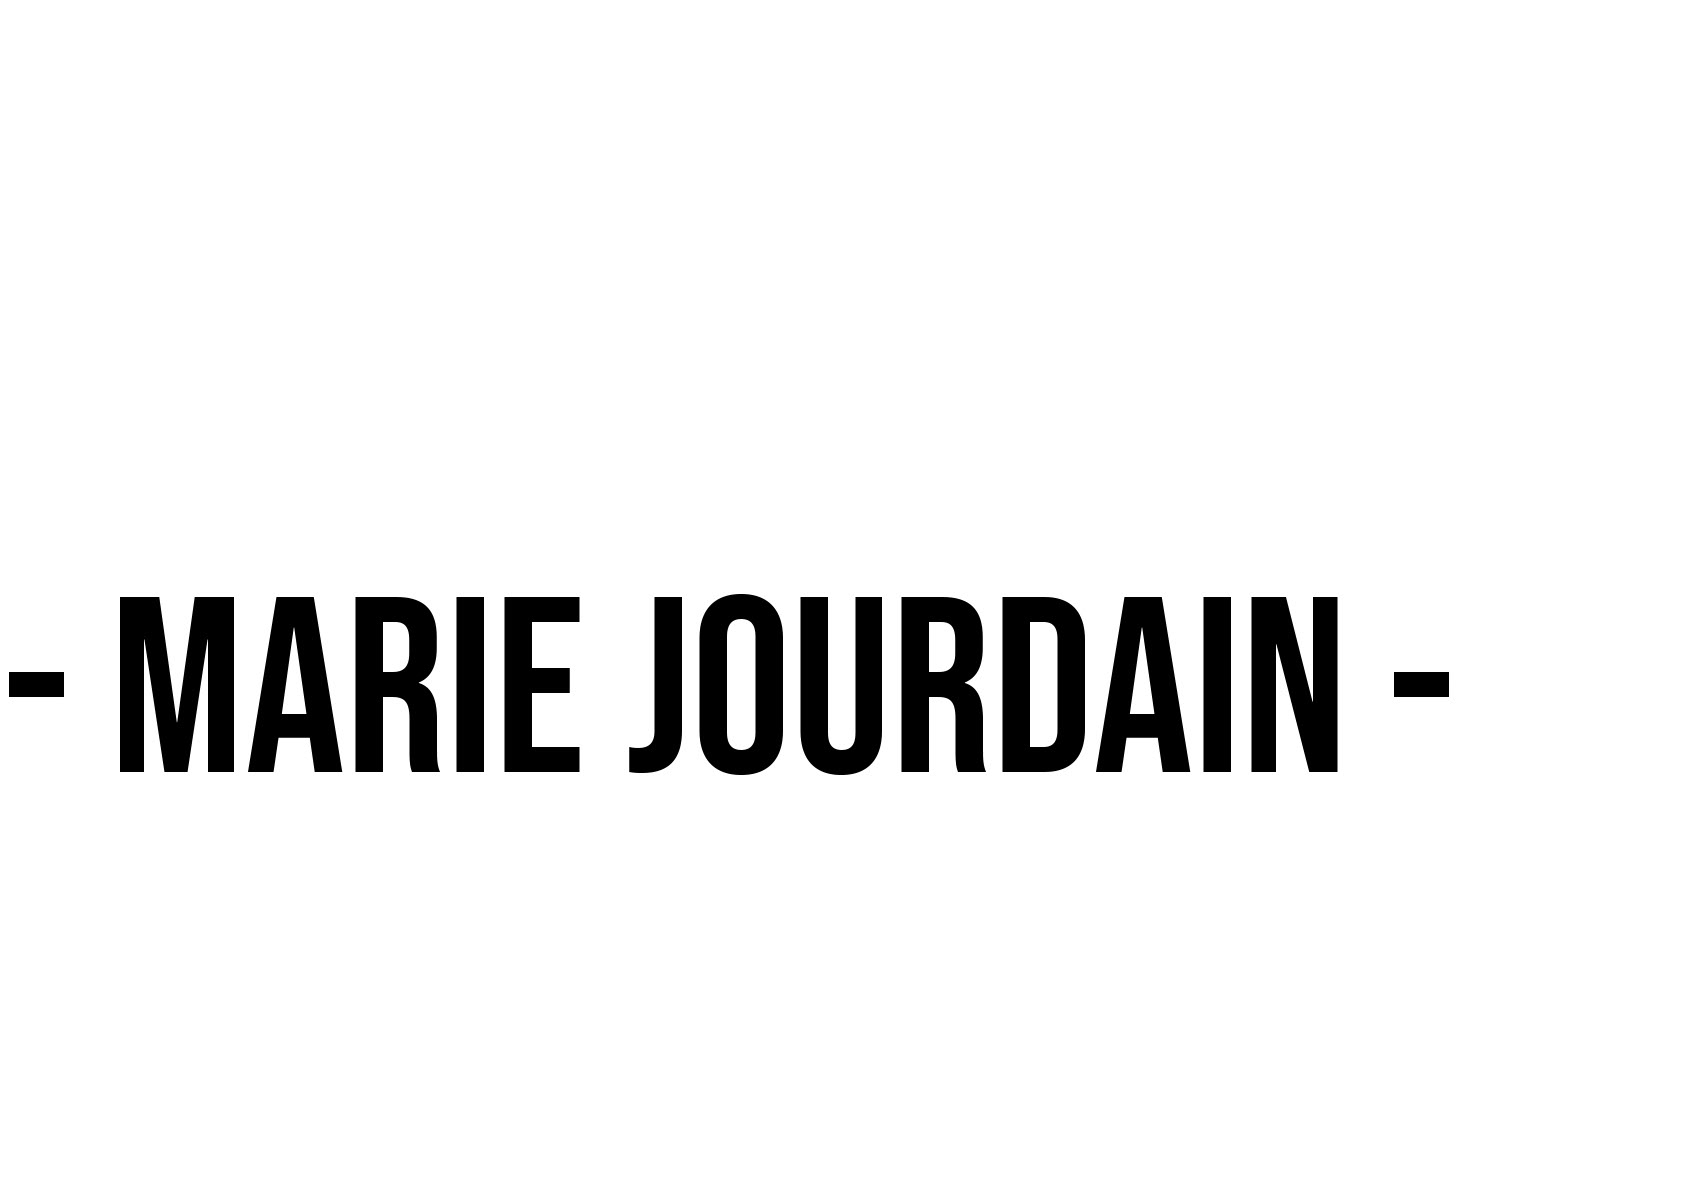 Marie JOURDAIN